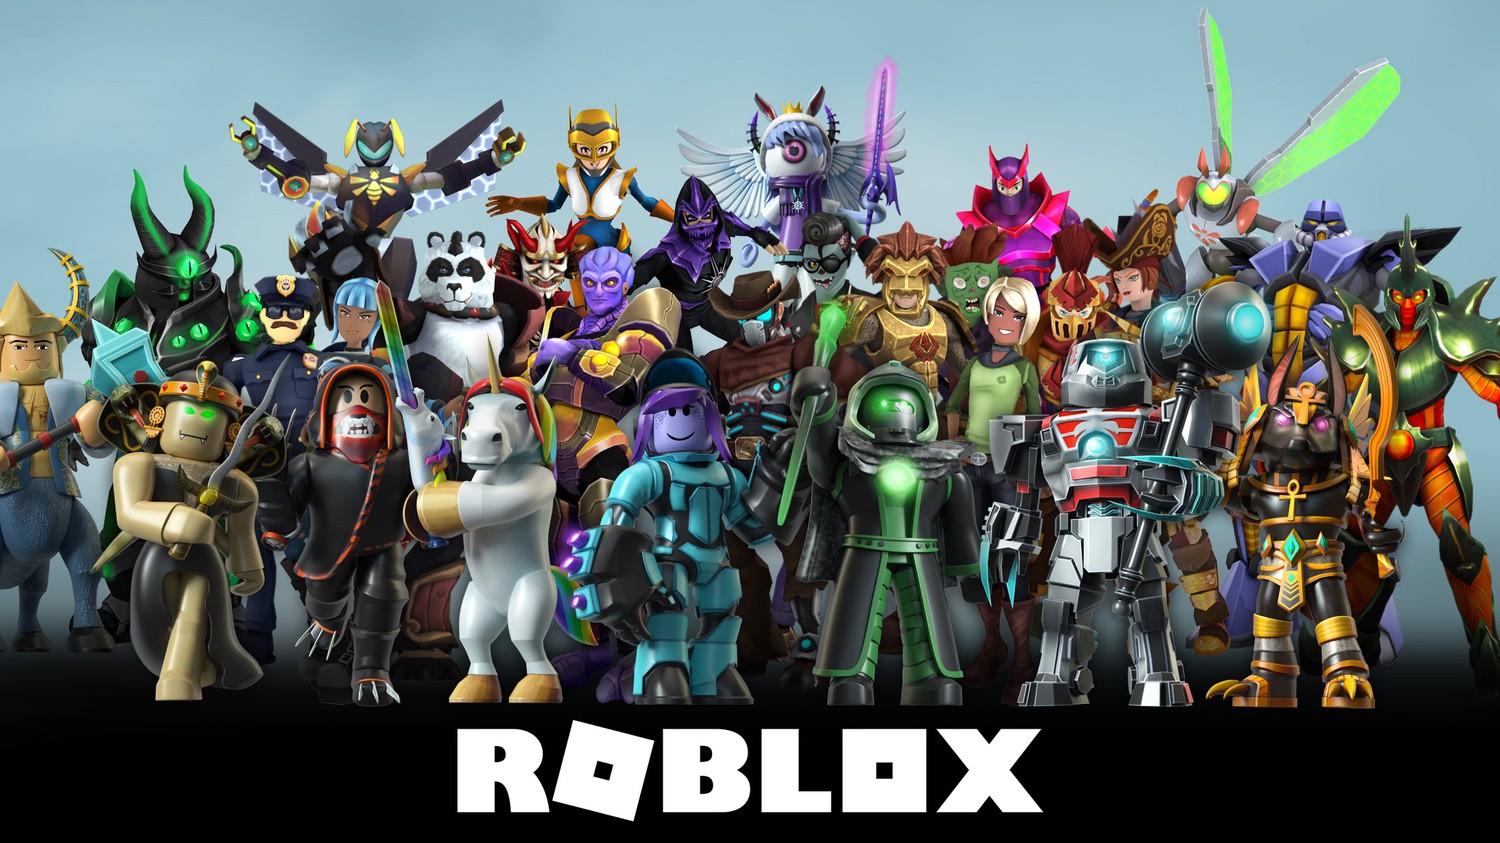 Prtipvbvuai0qm - games like roblox xbox one